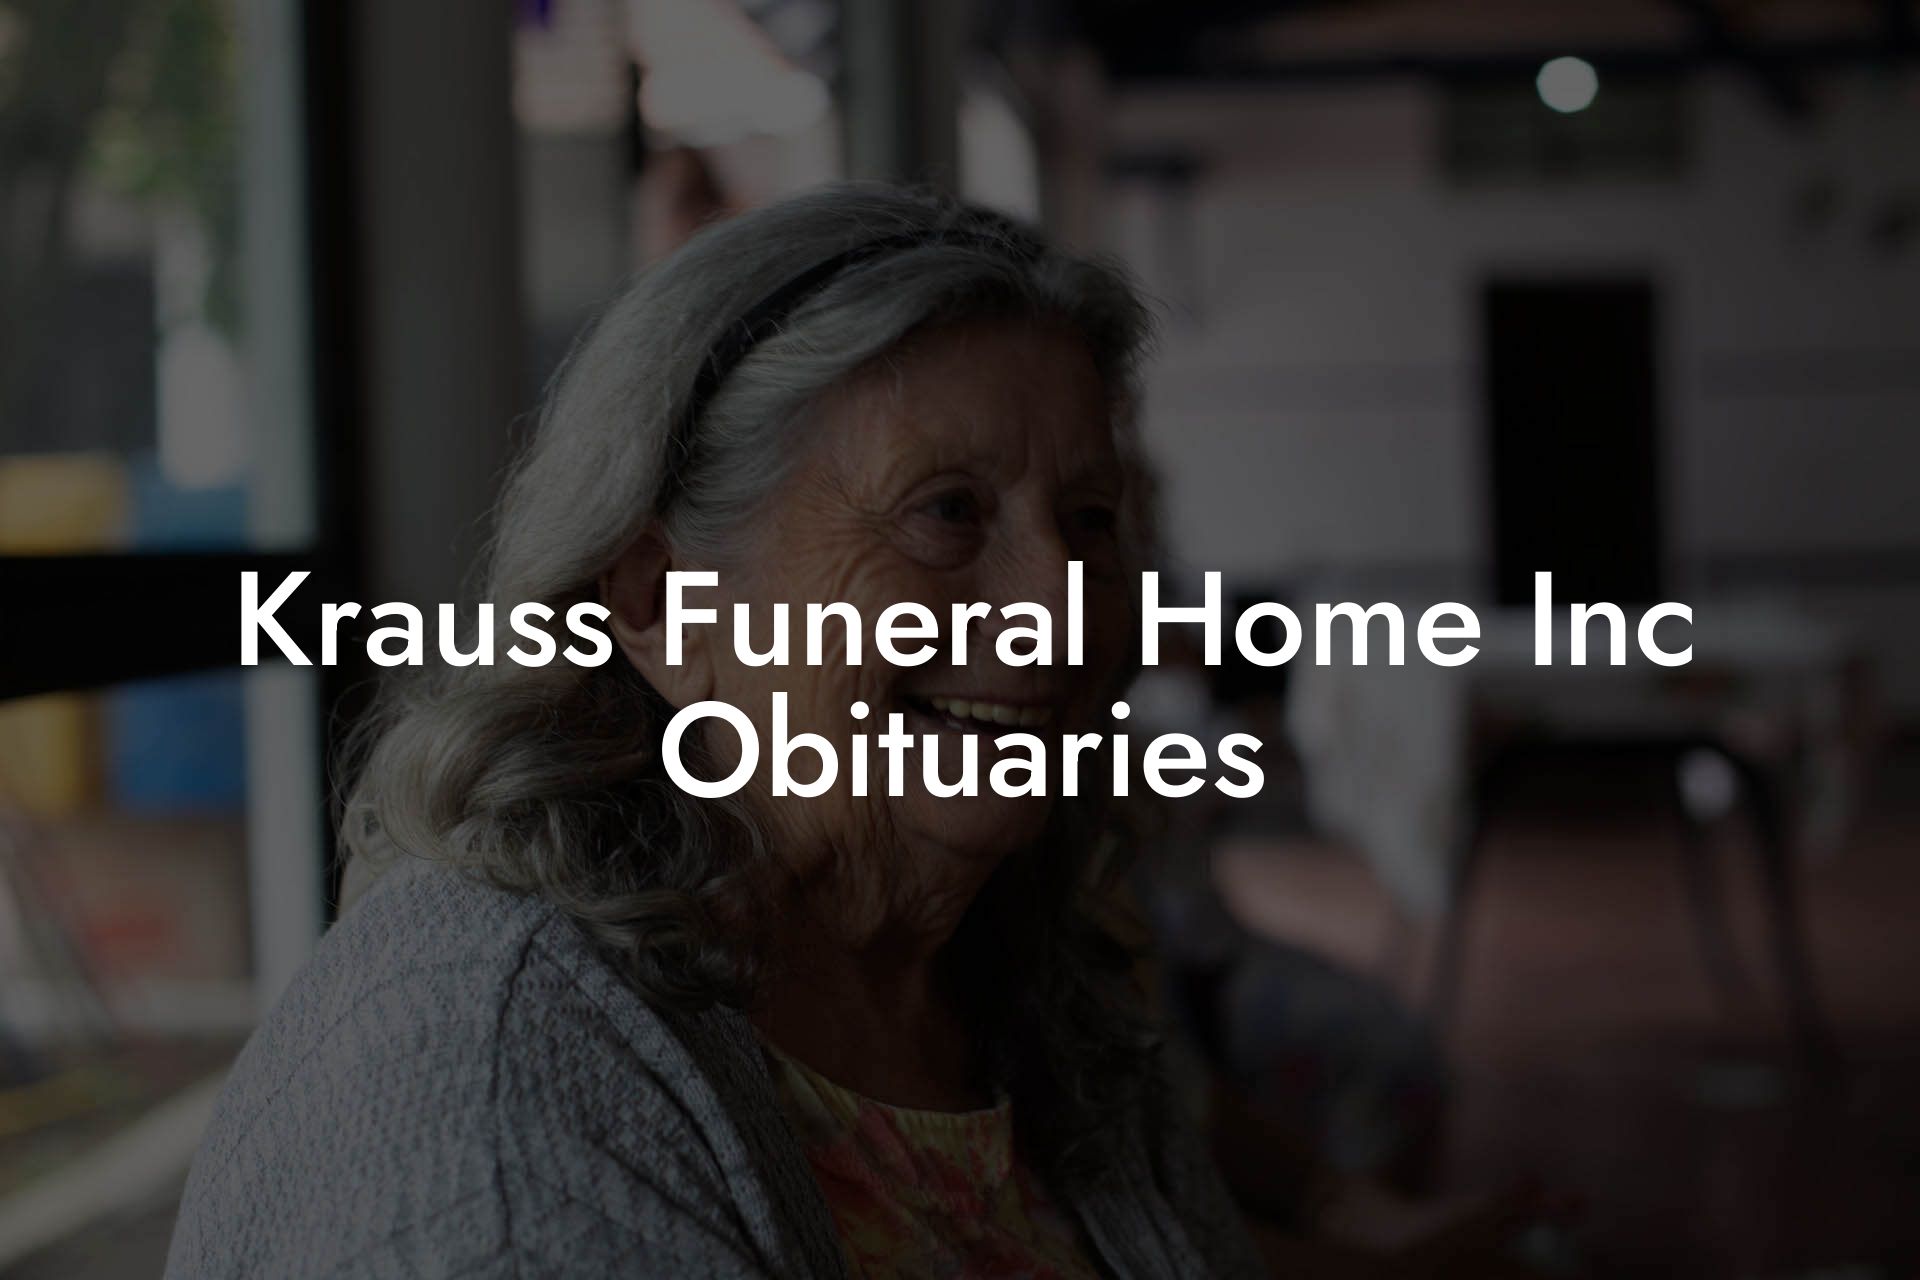 Krauss Funeral Home Inc Obituaries